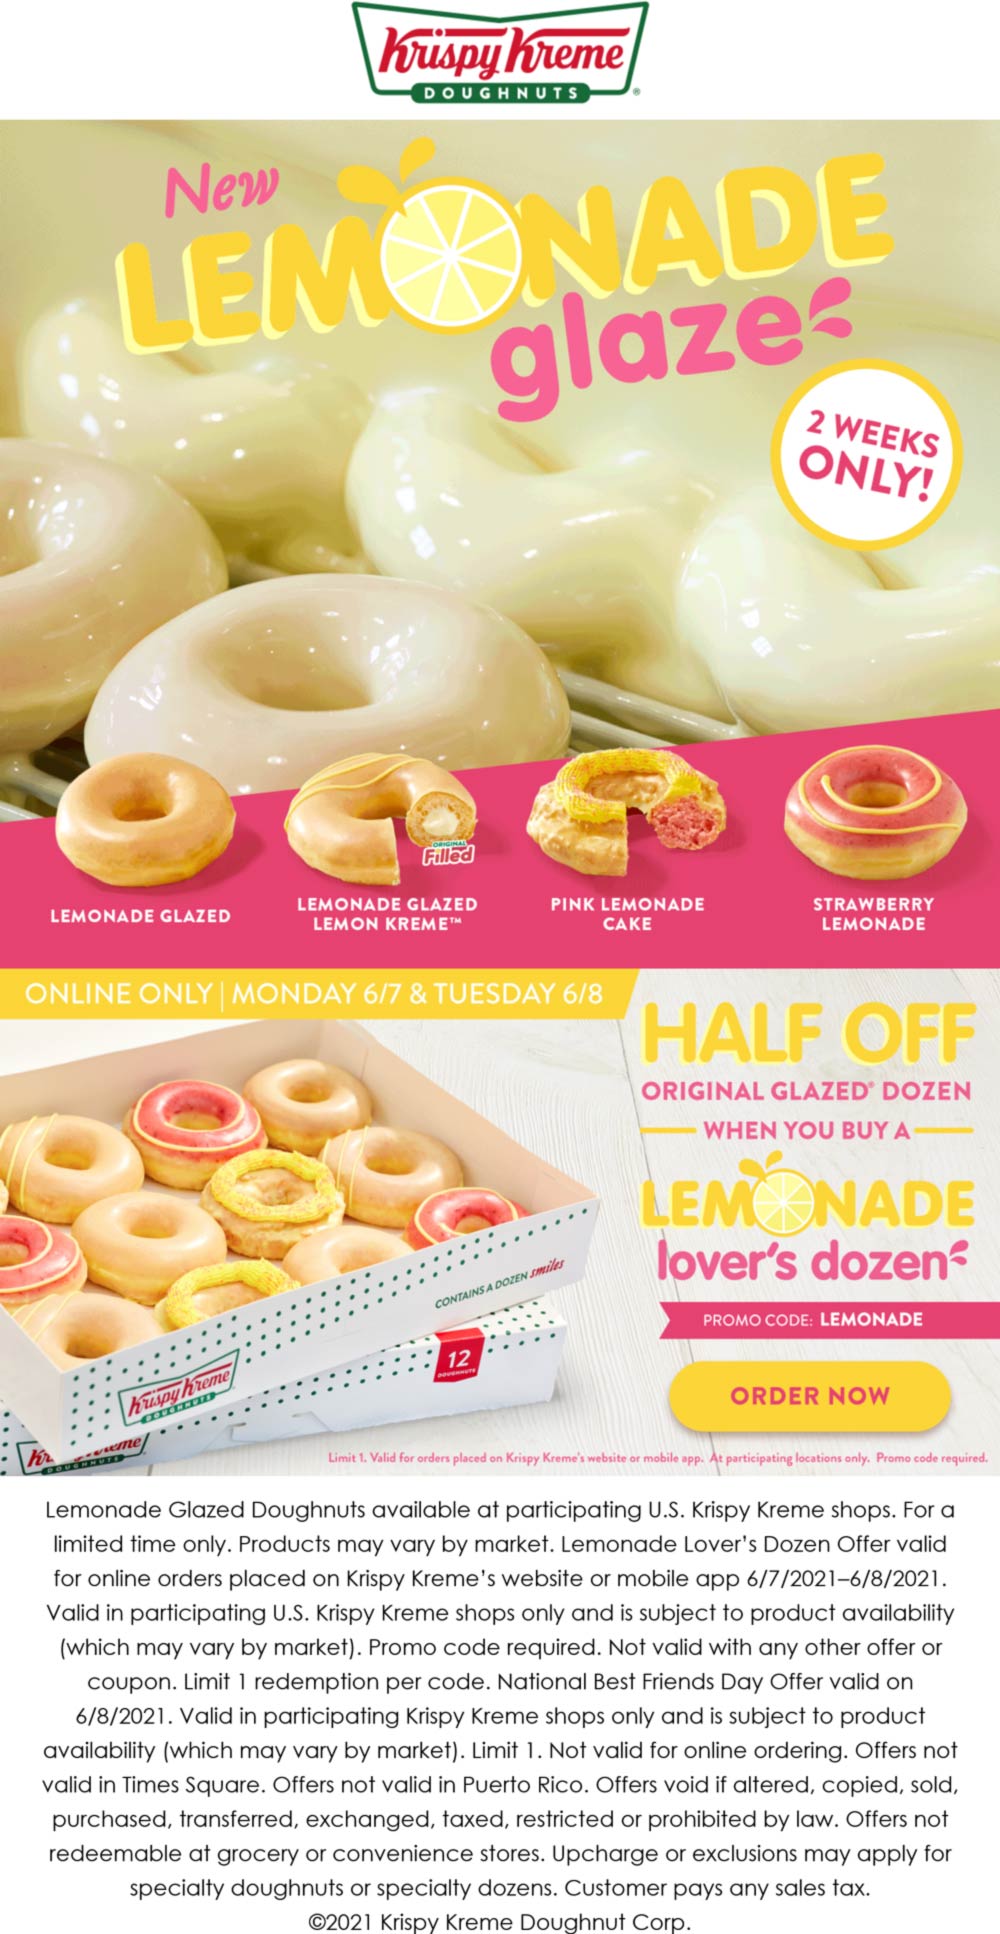 50-off-glazed-dozen-with-your-lemonade-dozen-at-krispy-kreme-via-promo